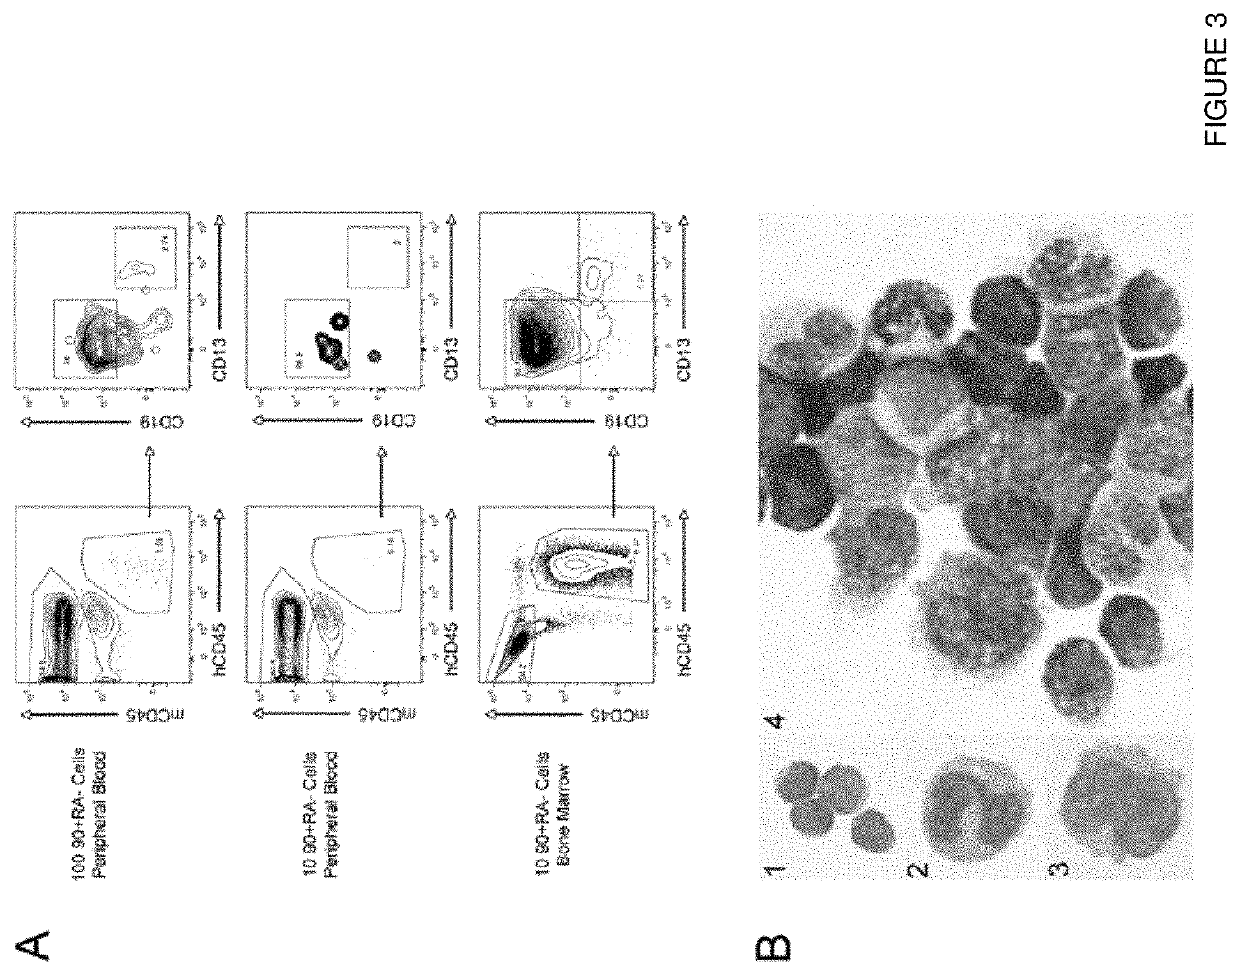 Markers of acute myeloid leukemia stem cells